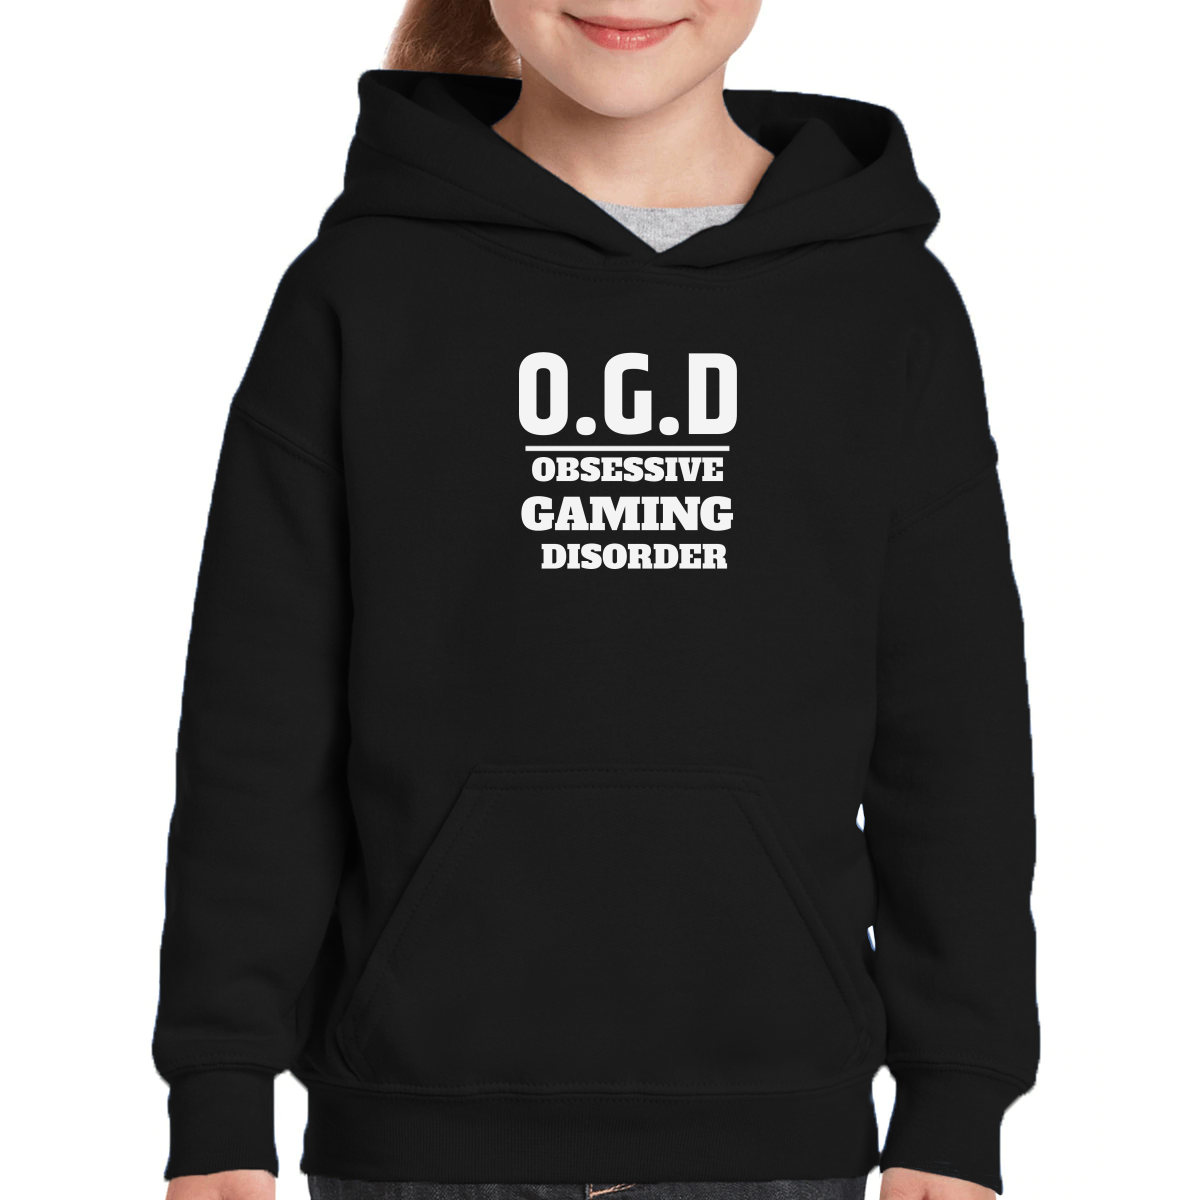 O.G.D Obsessive Gaming Disorder Kids Hoodie | Black